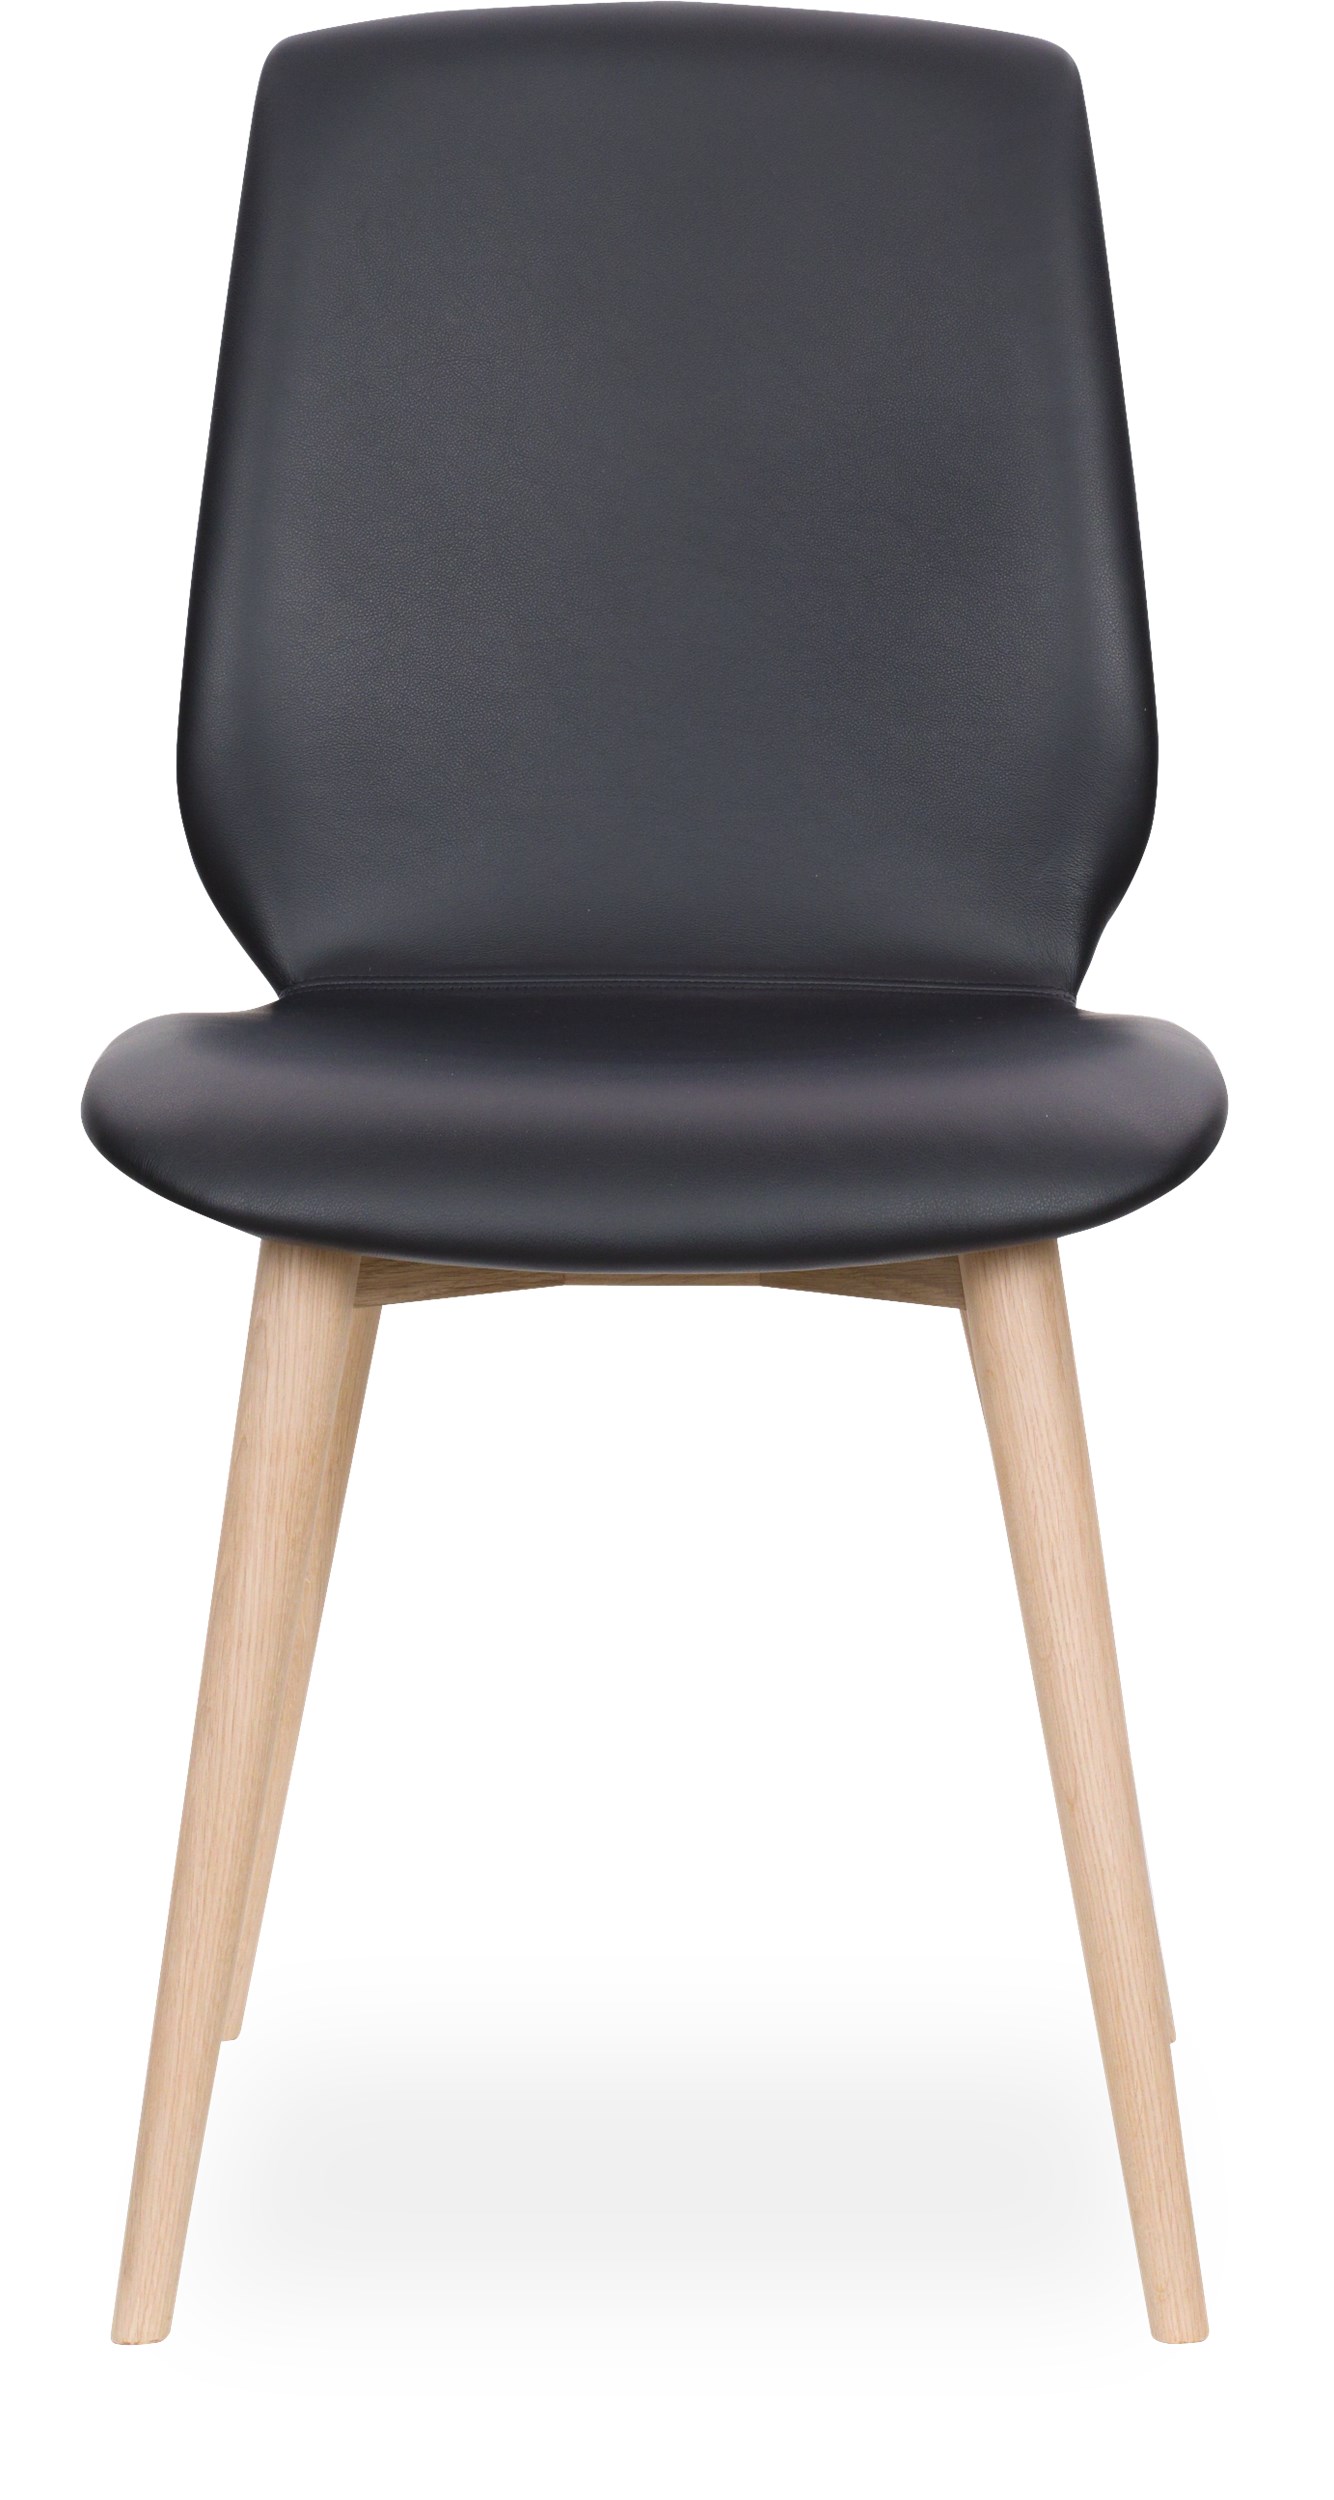 Share XL Curve matstol - Sits 0100 svart läder och curveben i vitpigmenterad mattlackad ek